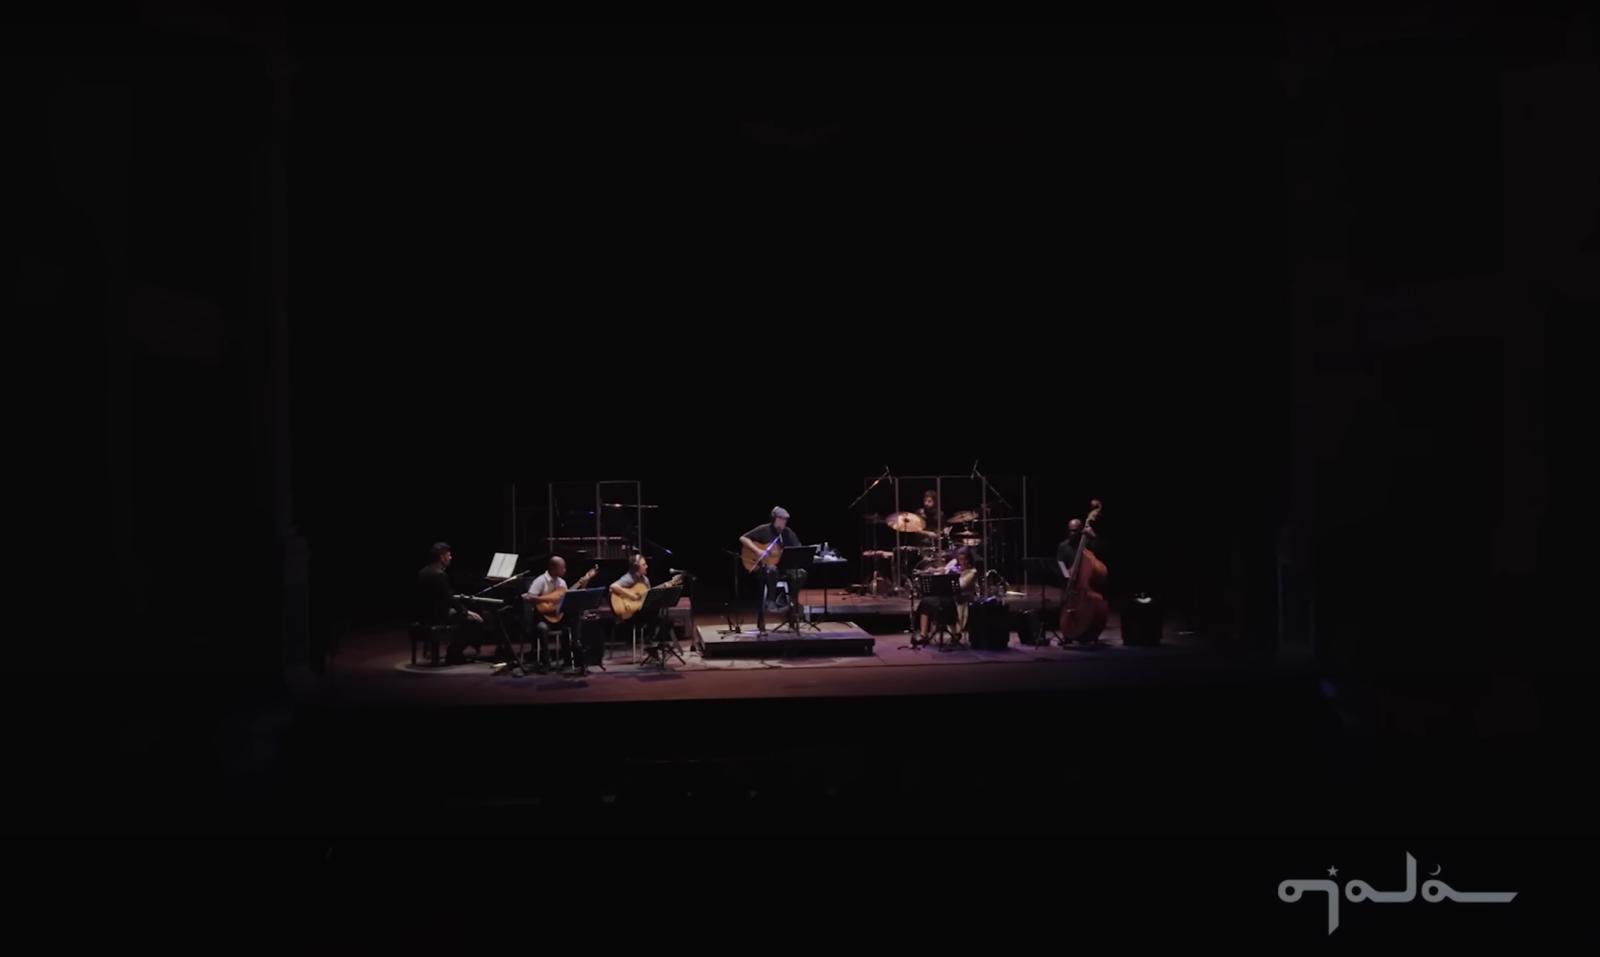 "La gaviota". Silvio Rodriguez in concert 